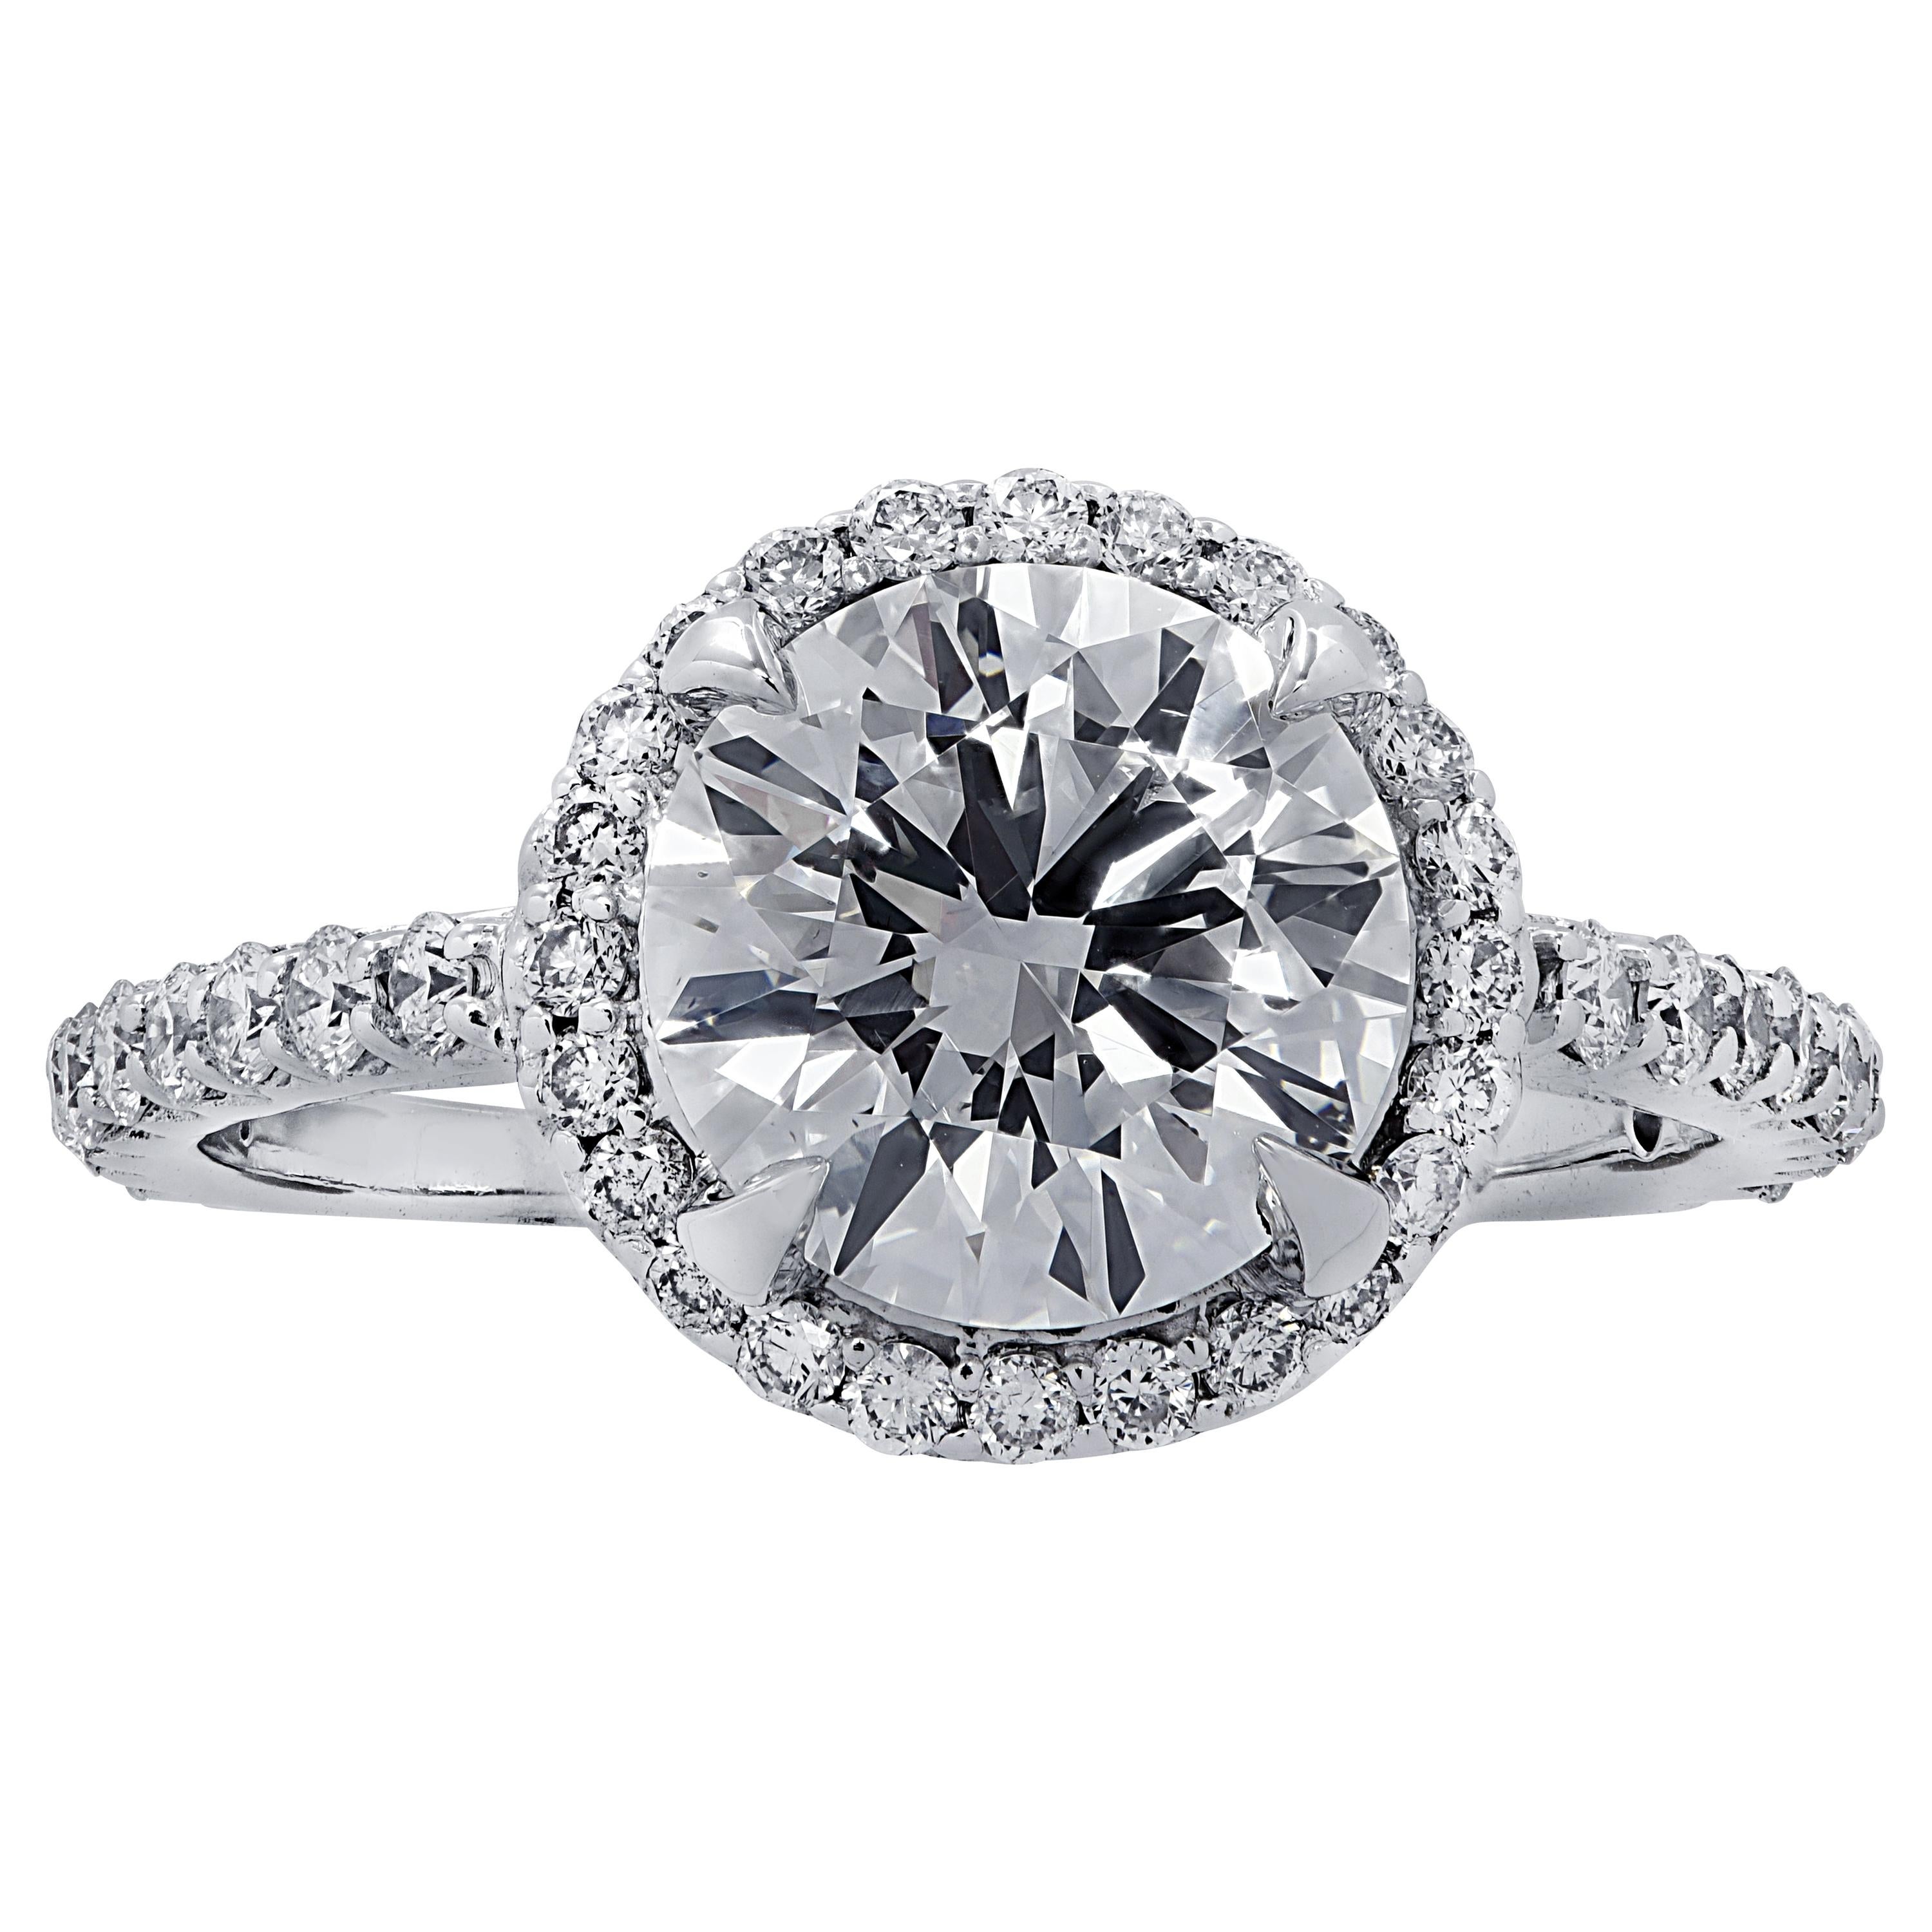 1.74 Carat Round Brilliant Halo Diamond Engagement Ring GIA Certified E/SI1